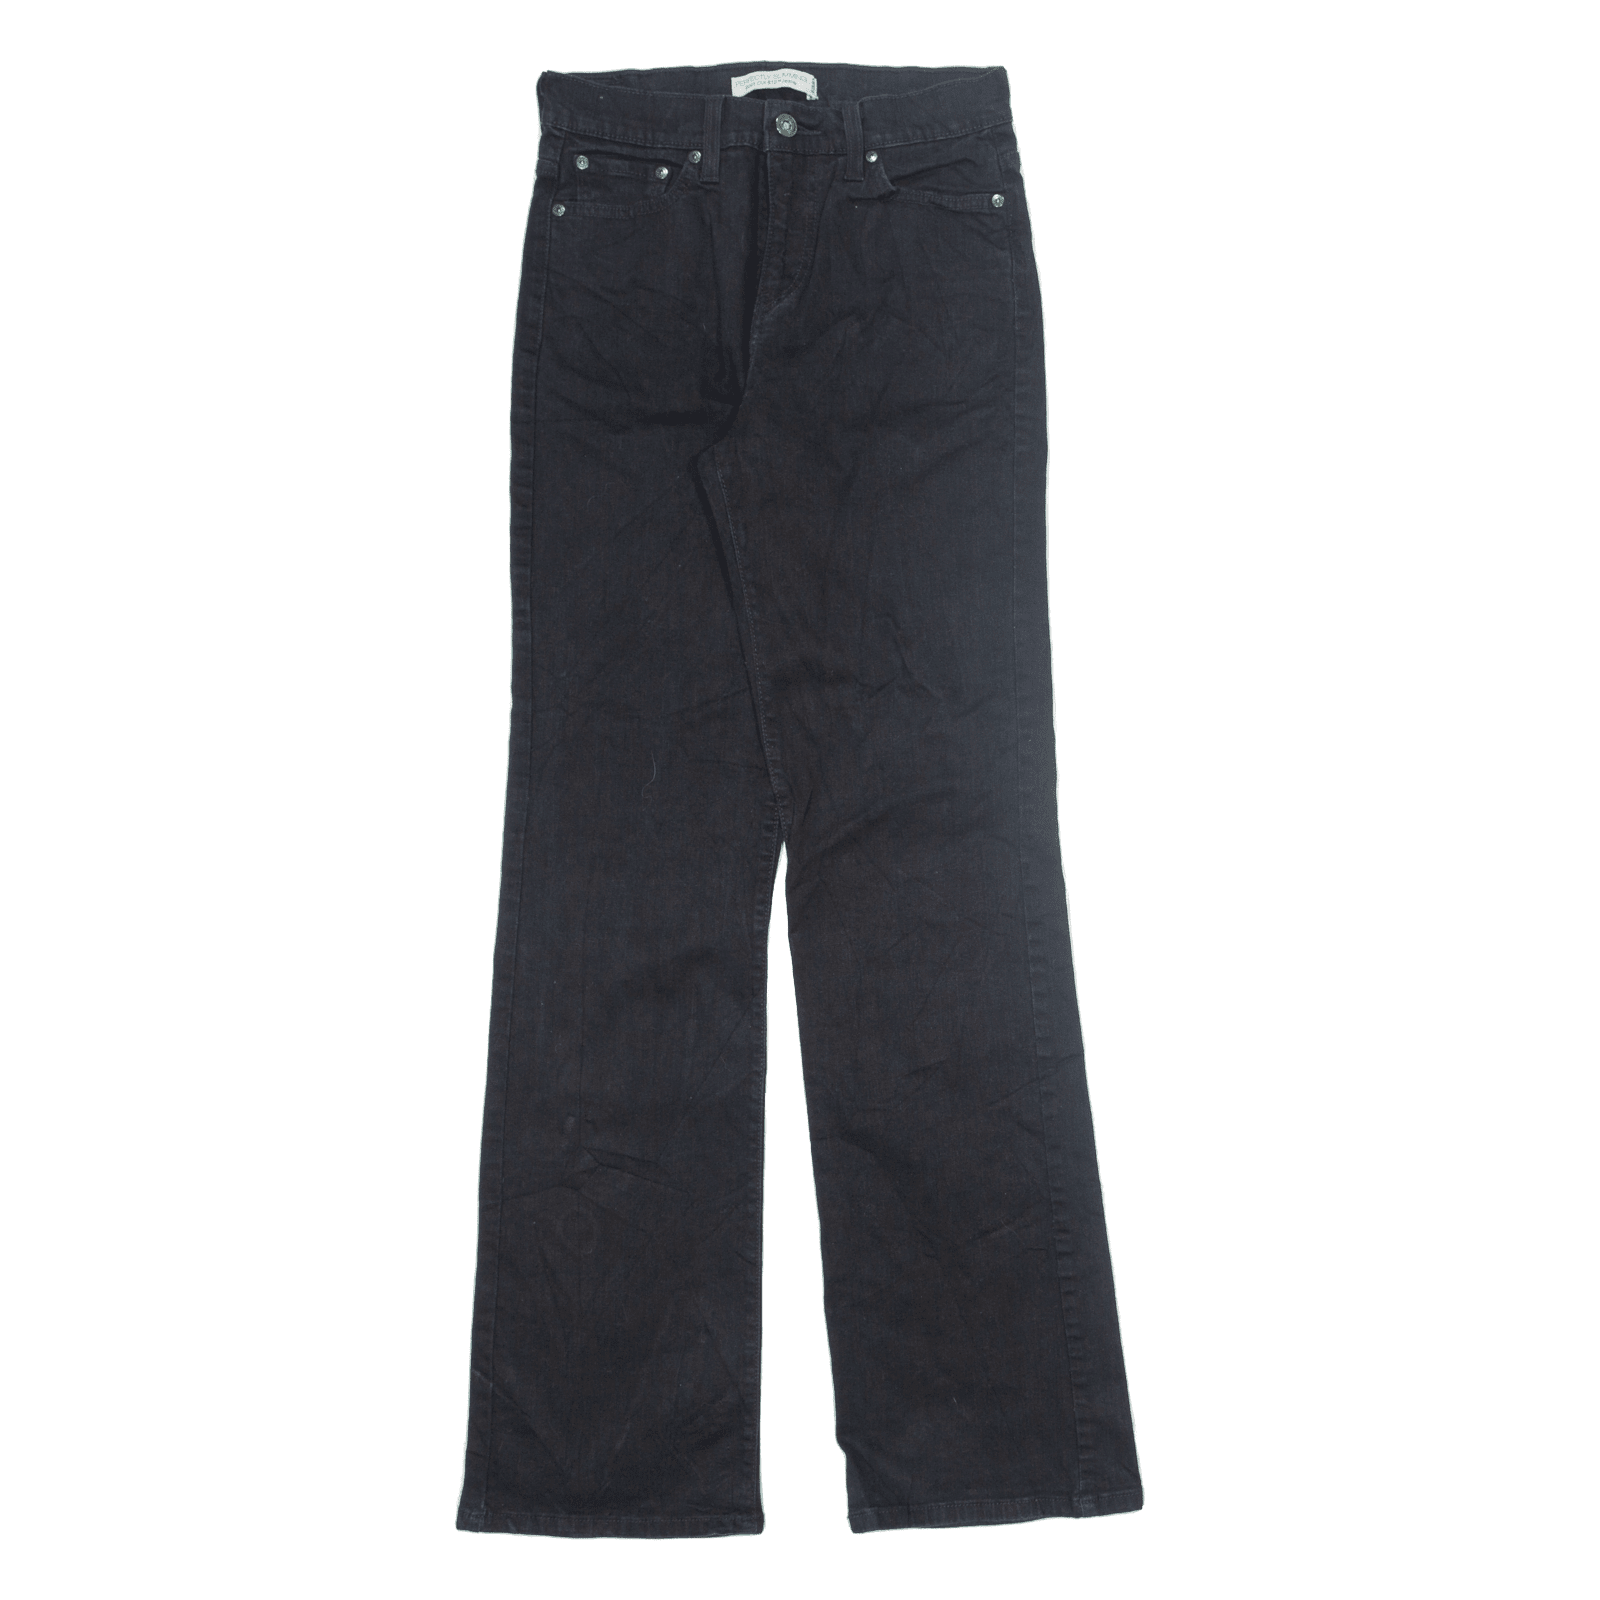 LEVI'S 512 Perfectly Slimming Jeans Black Denim Slim Bootcut Womens W27 L32